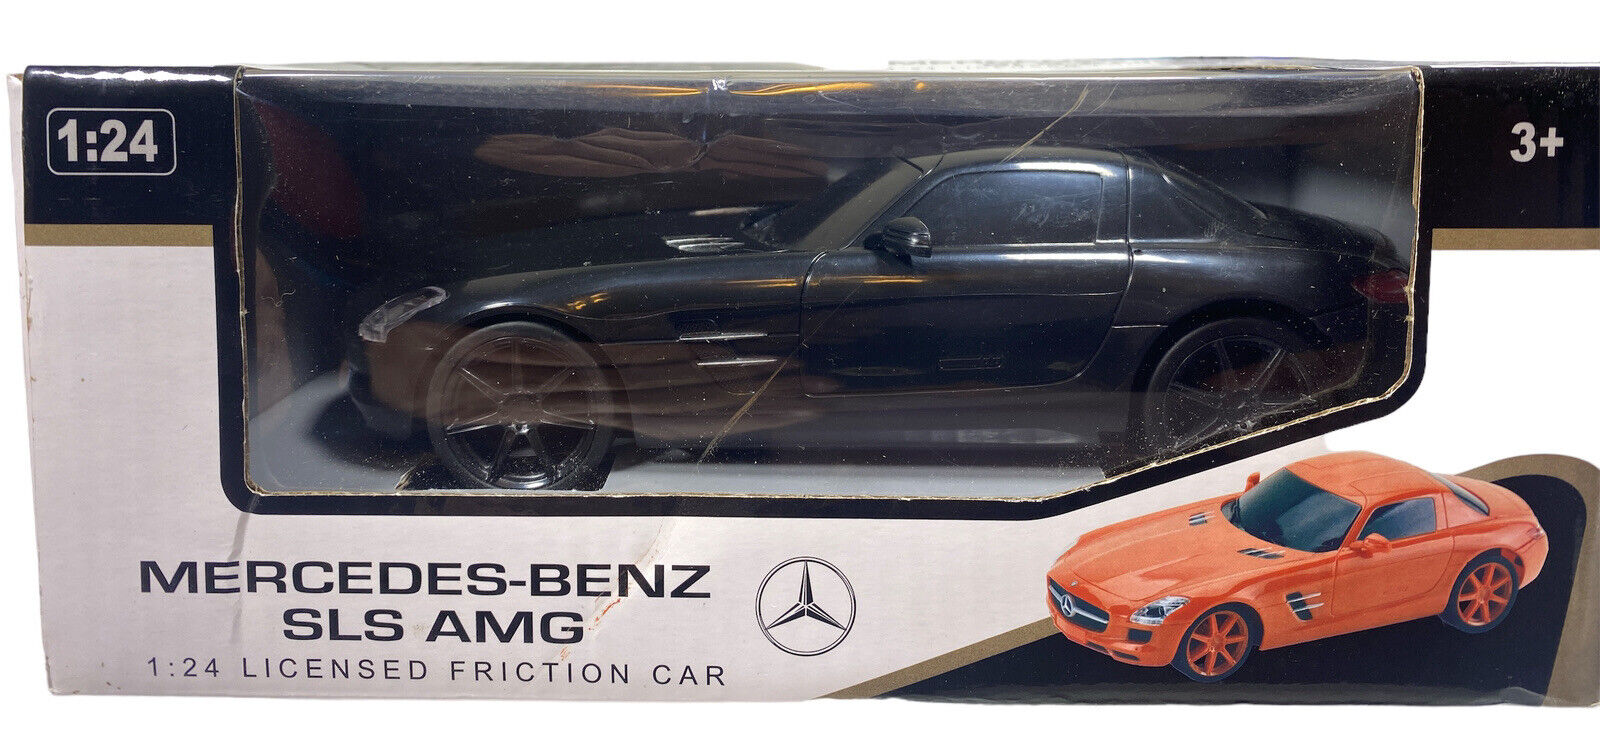 Mercedes Benz SLS AMG Toy Car Replica Model Black 1:24 Licensed Friction Car New mercredes-benz N/A